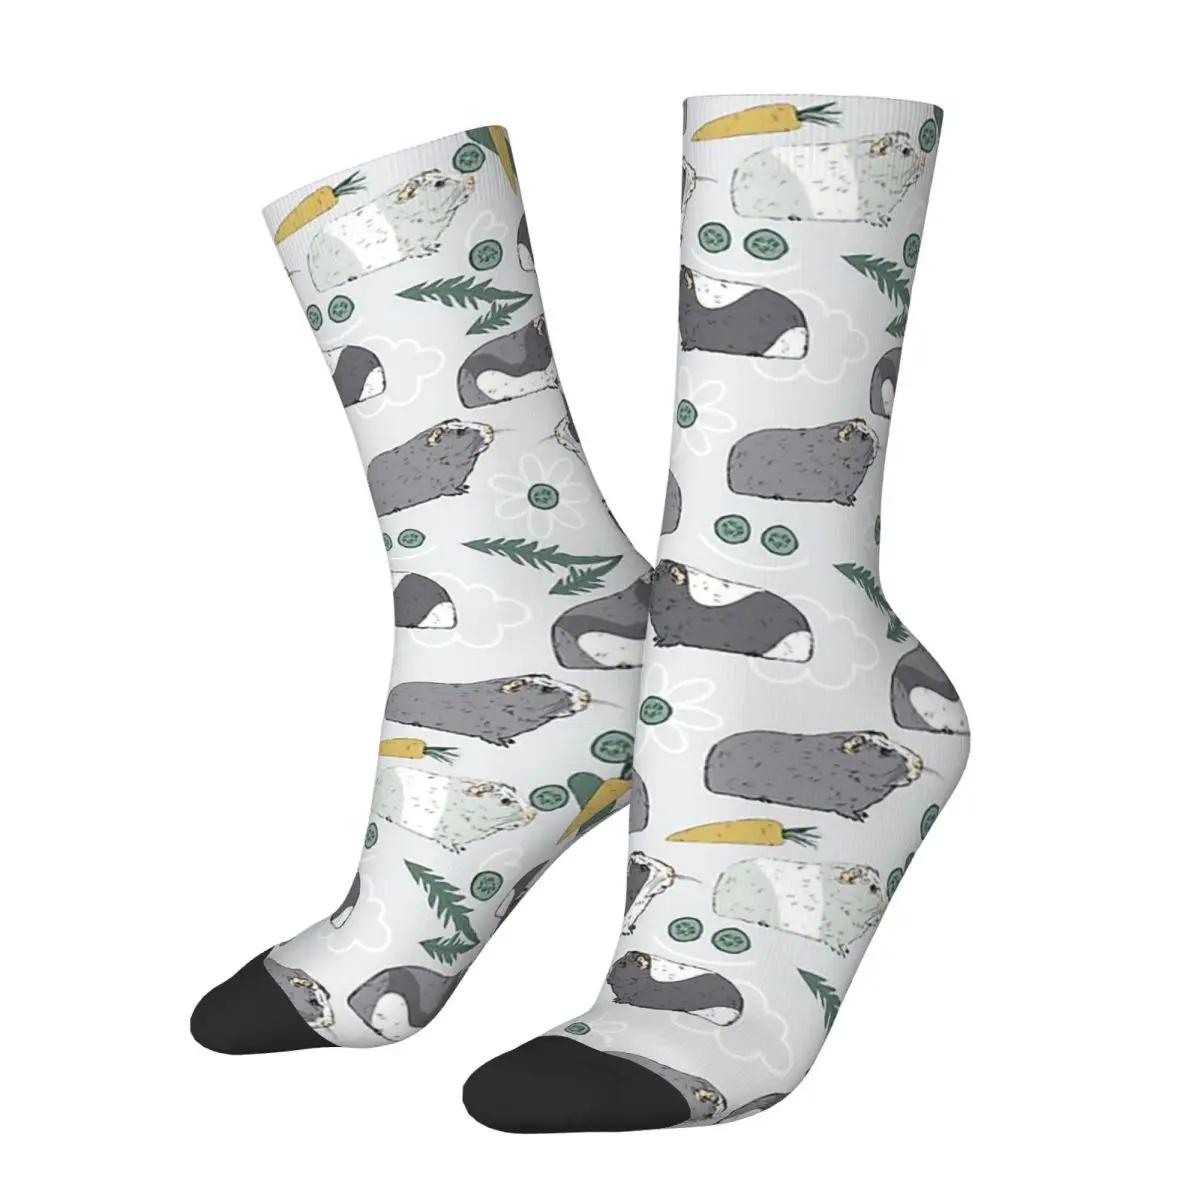 

Guinea Pigs With Cucumber Carrot On Grey Capybara Unisex Winter Socks Warm Happy Socks Street Style Crazy Sock